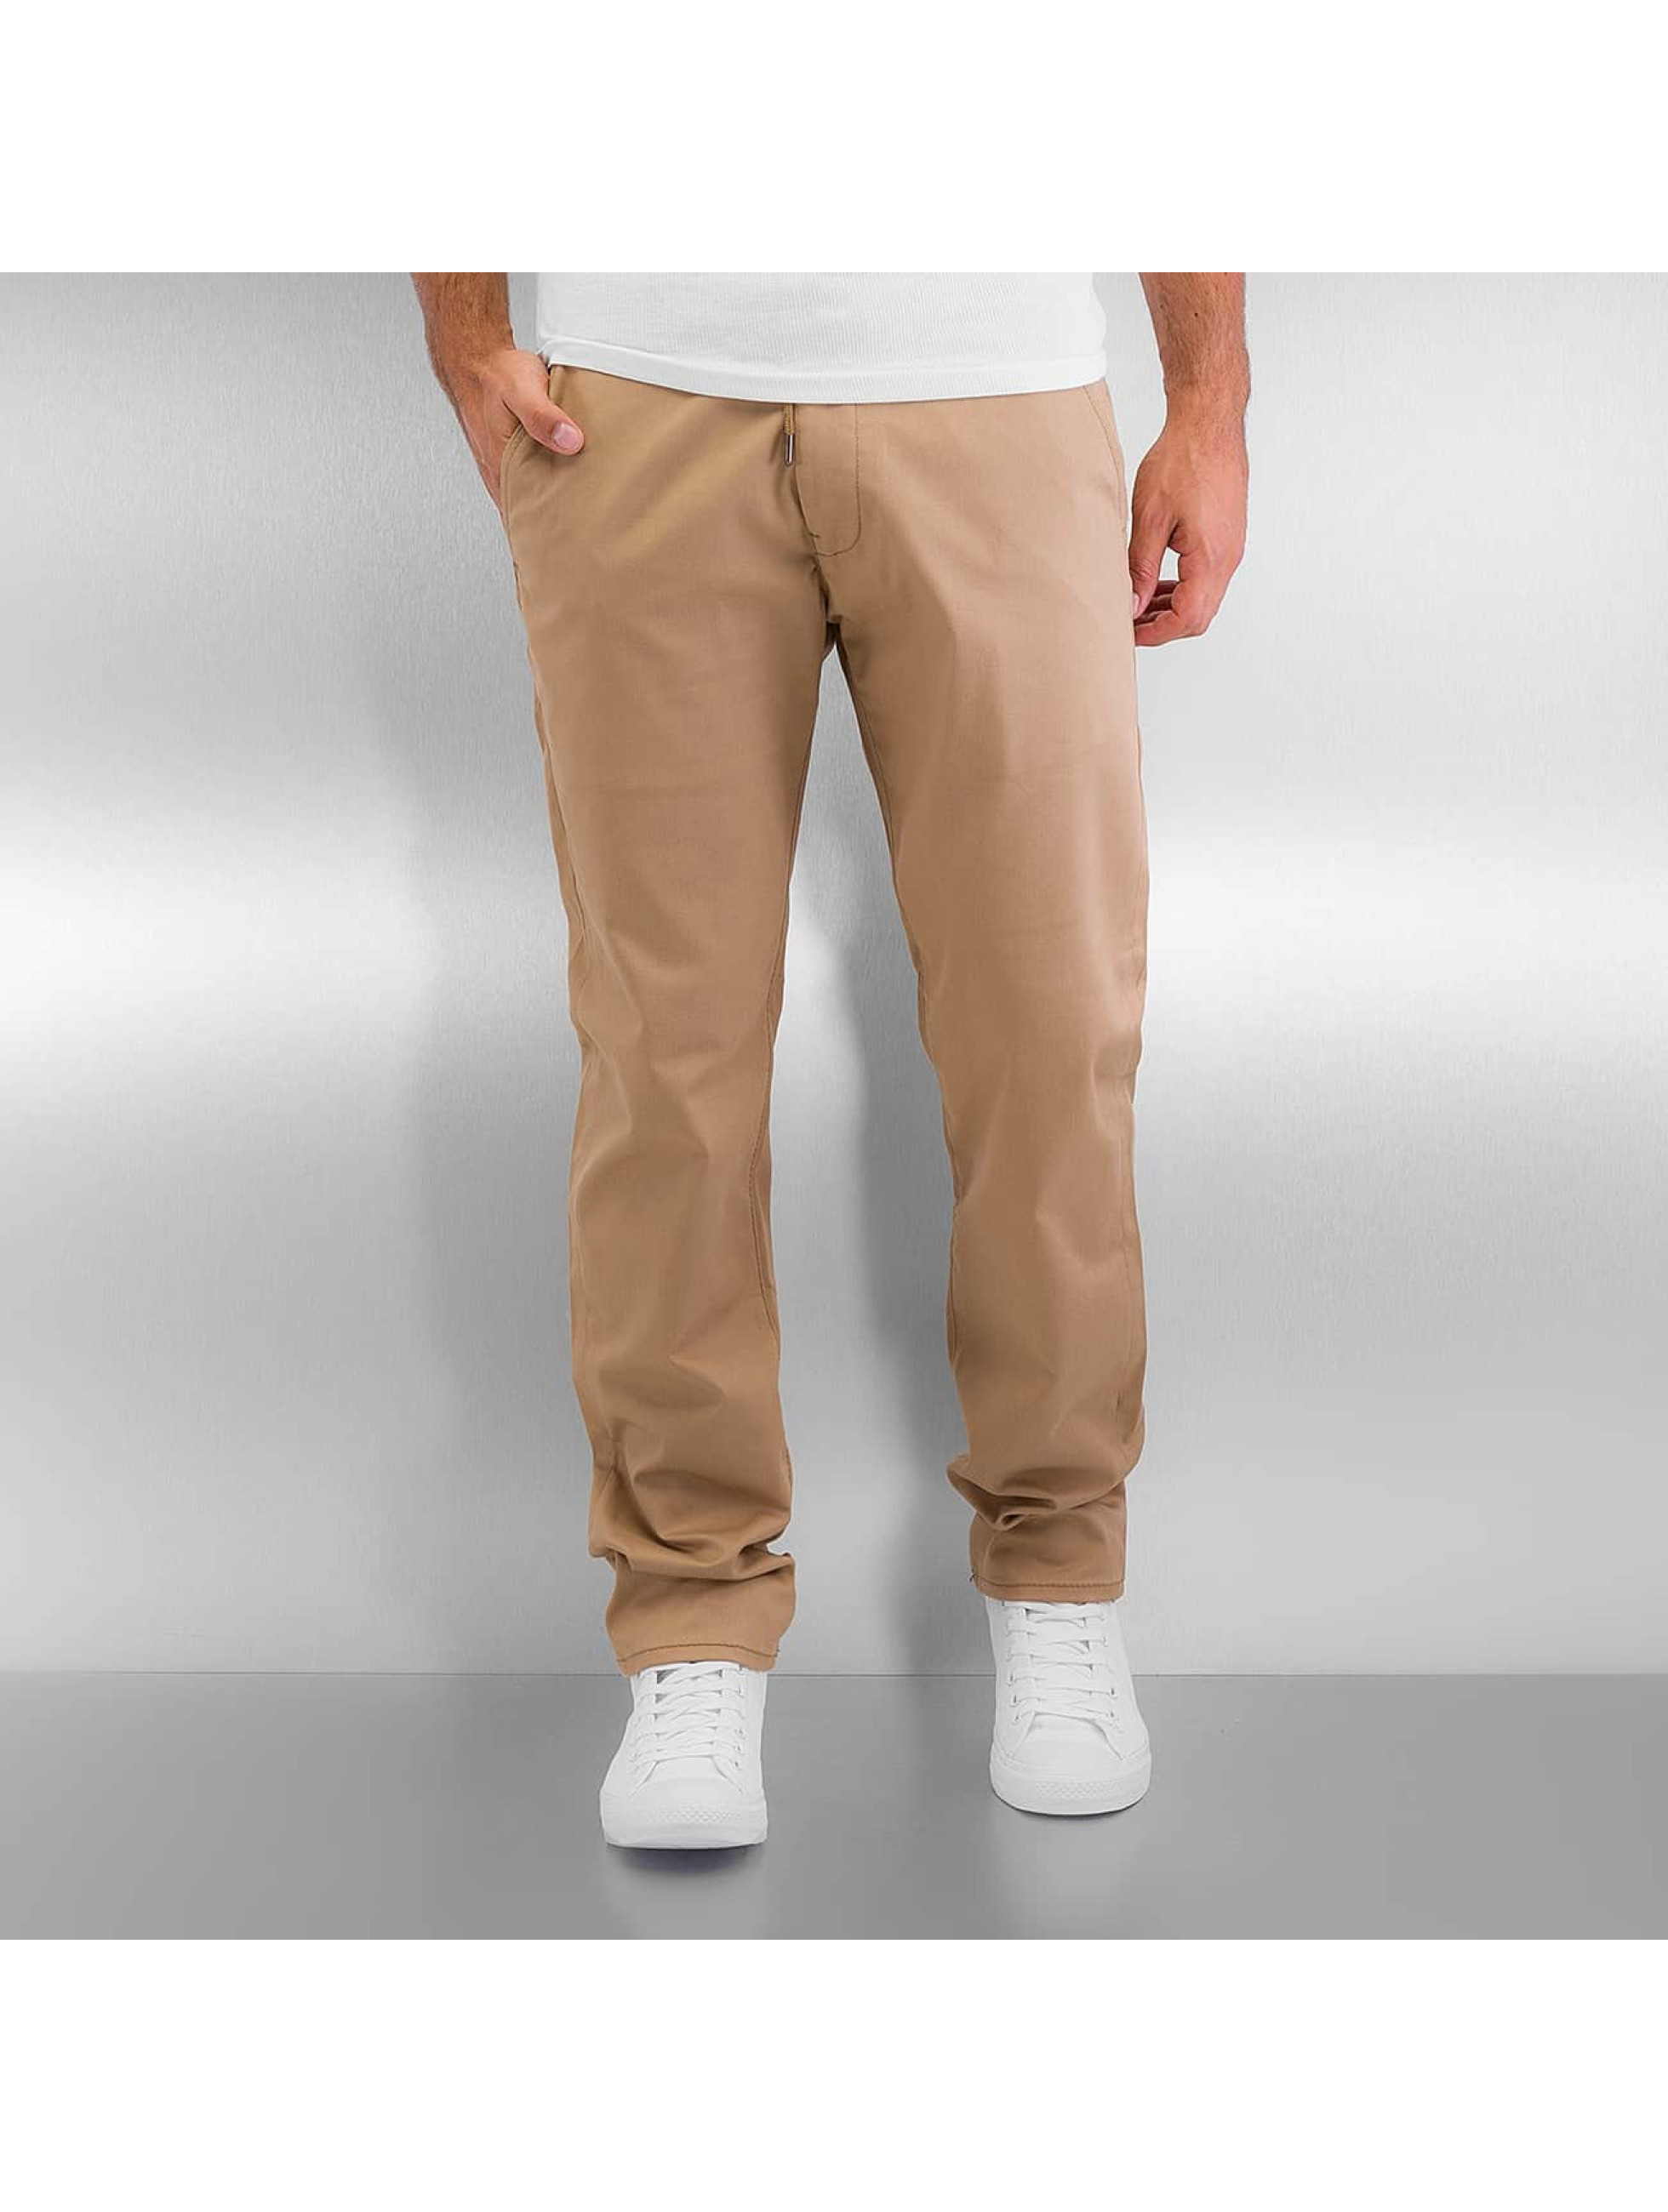 Reell Jeans broek / joggingbroek Reflex Easy in beige